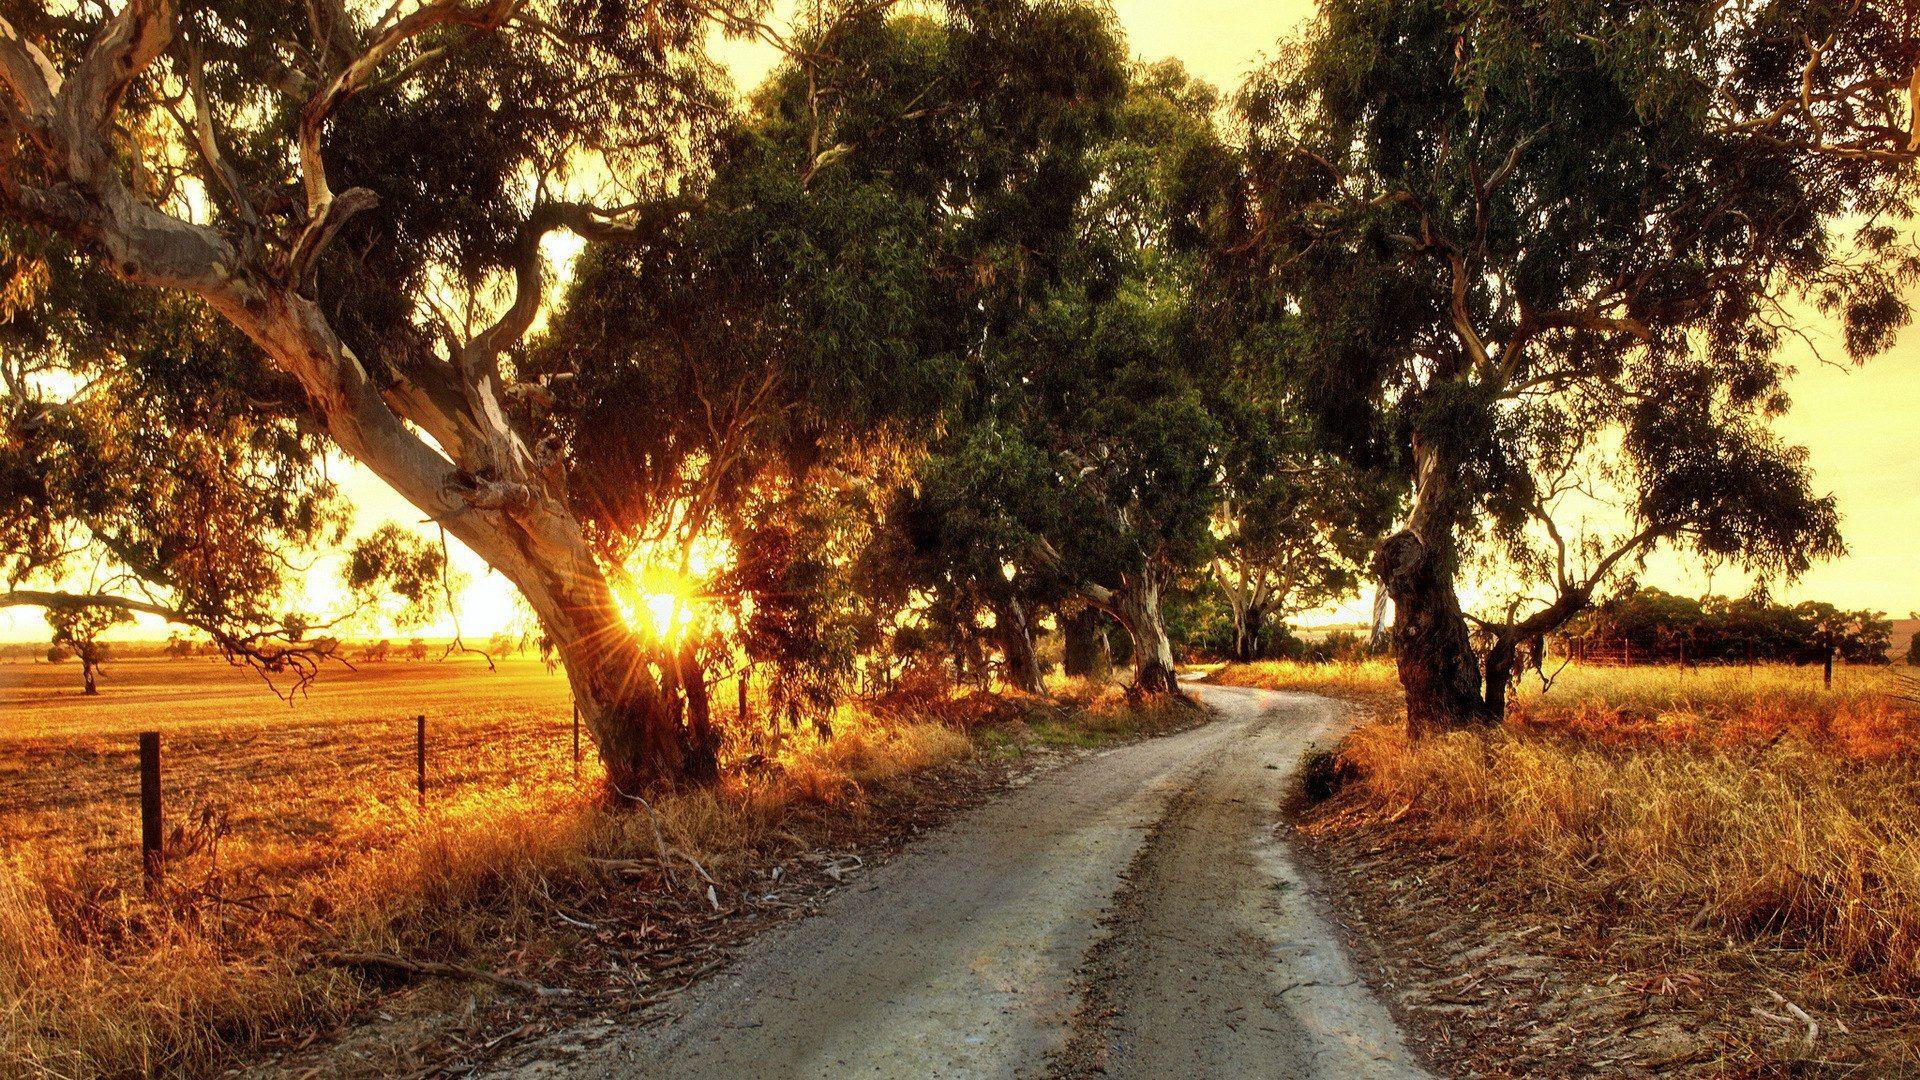 Rural road in Australia wallpaper and image